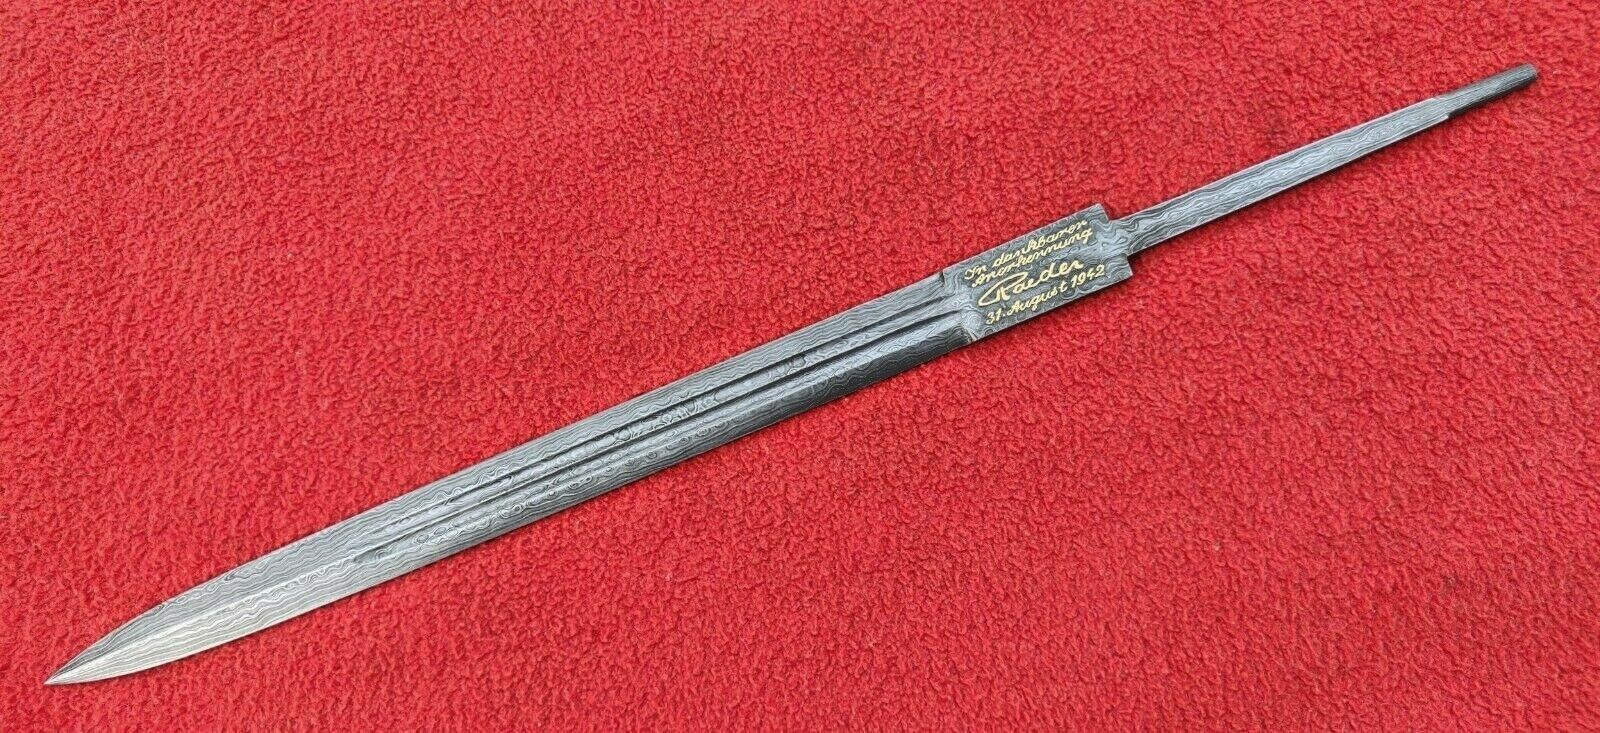 Erich Raeder Honor Damascus Steel German Naval Dagger WWII Blade With Gold Work 